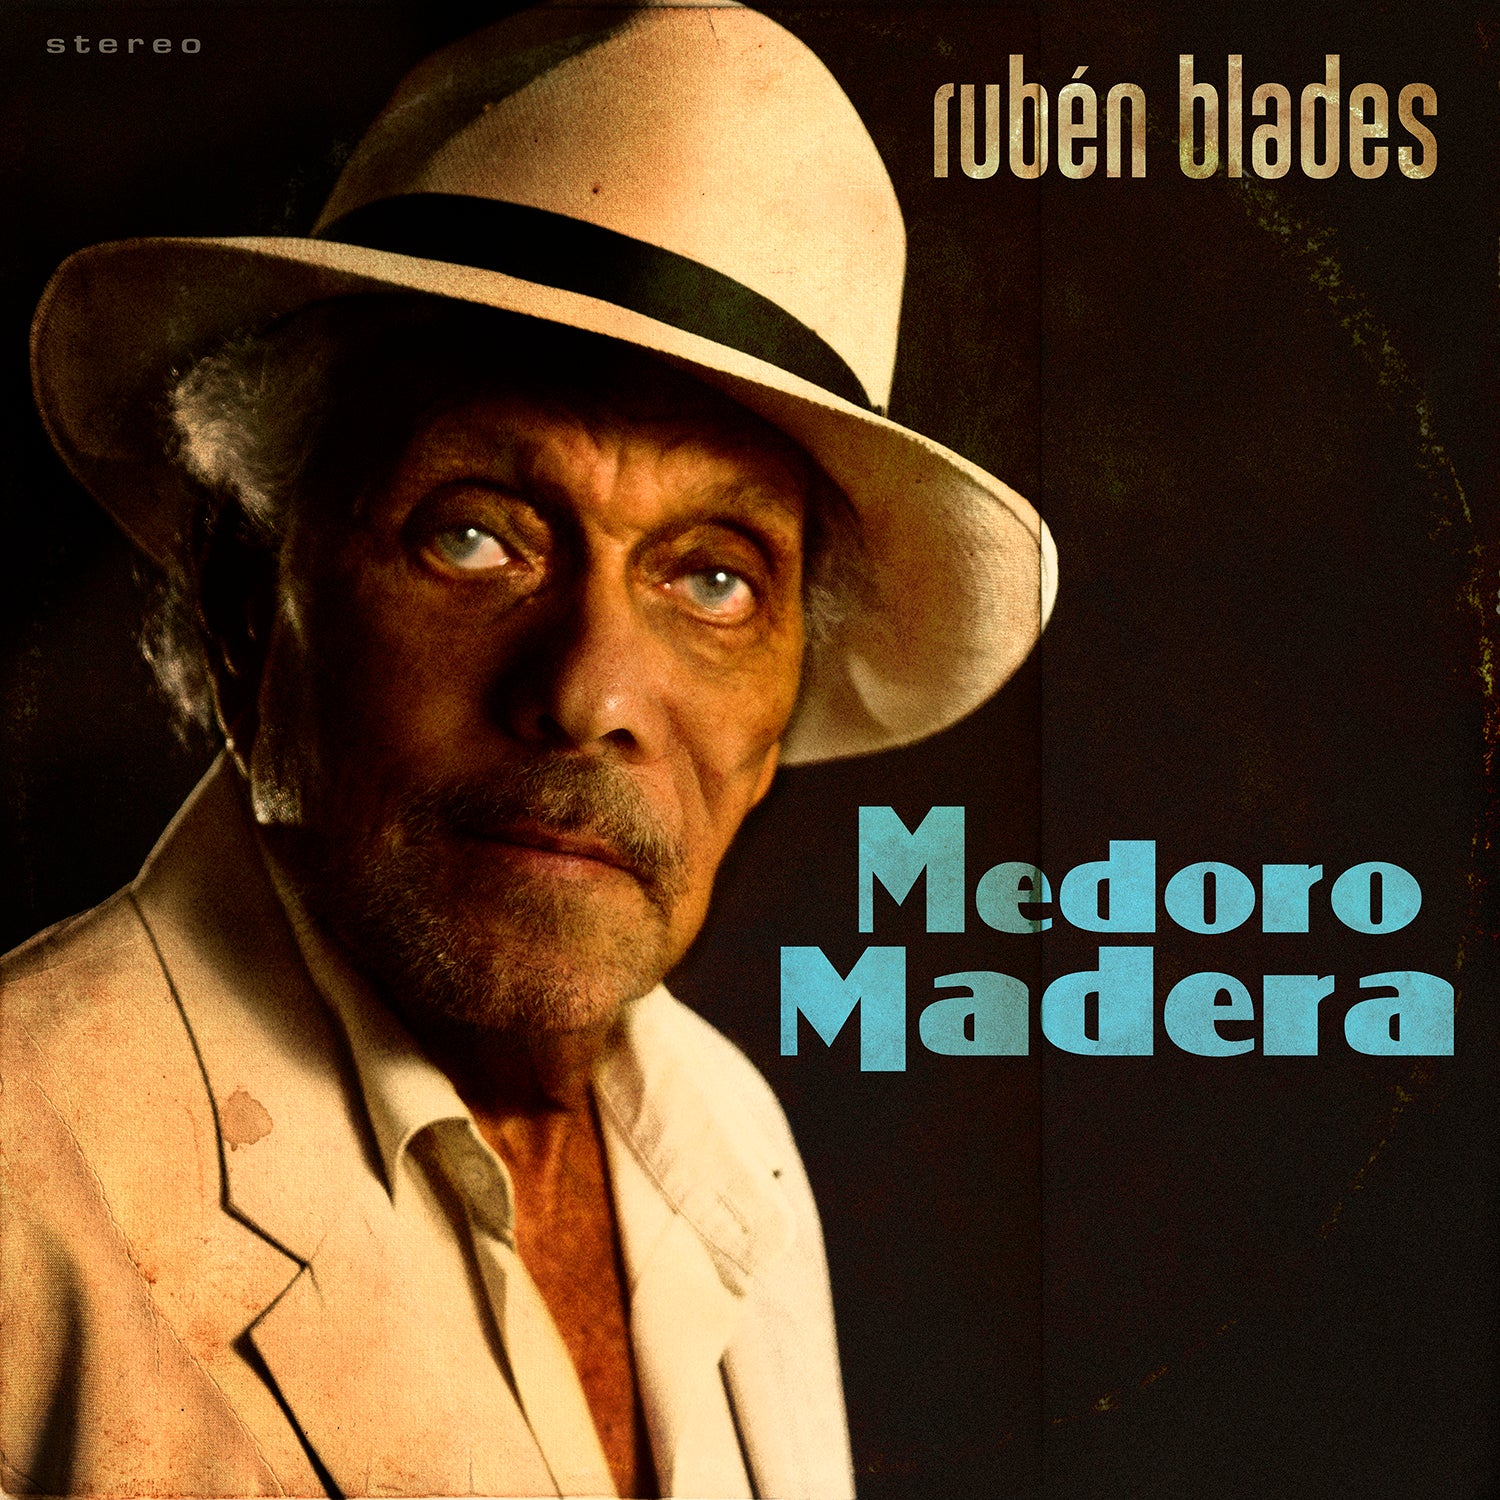 Rubén Blades - "Medoro Madera"